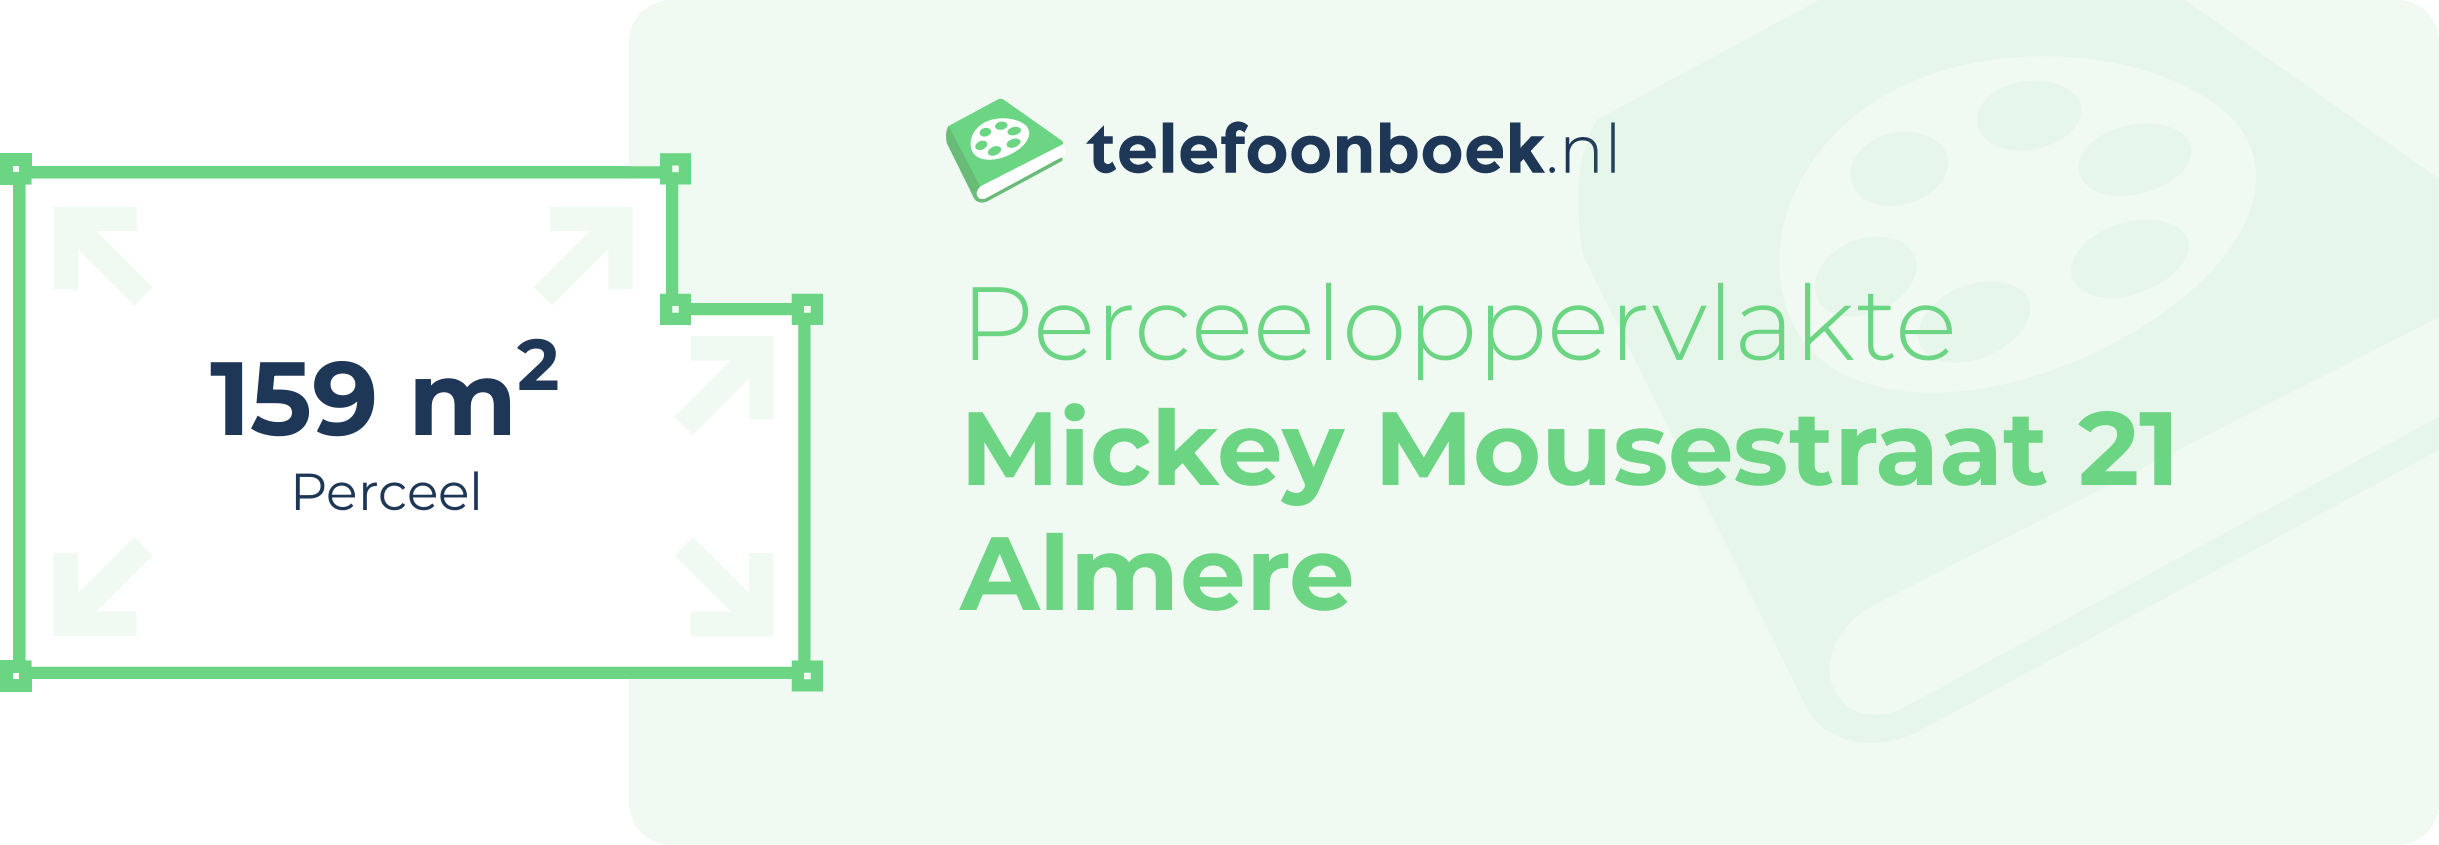 Perceeloppervlakte Mickey Mousestraat 21 Almere